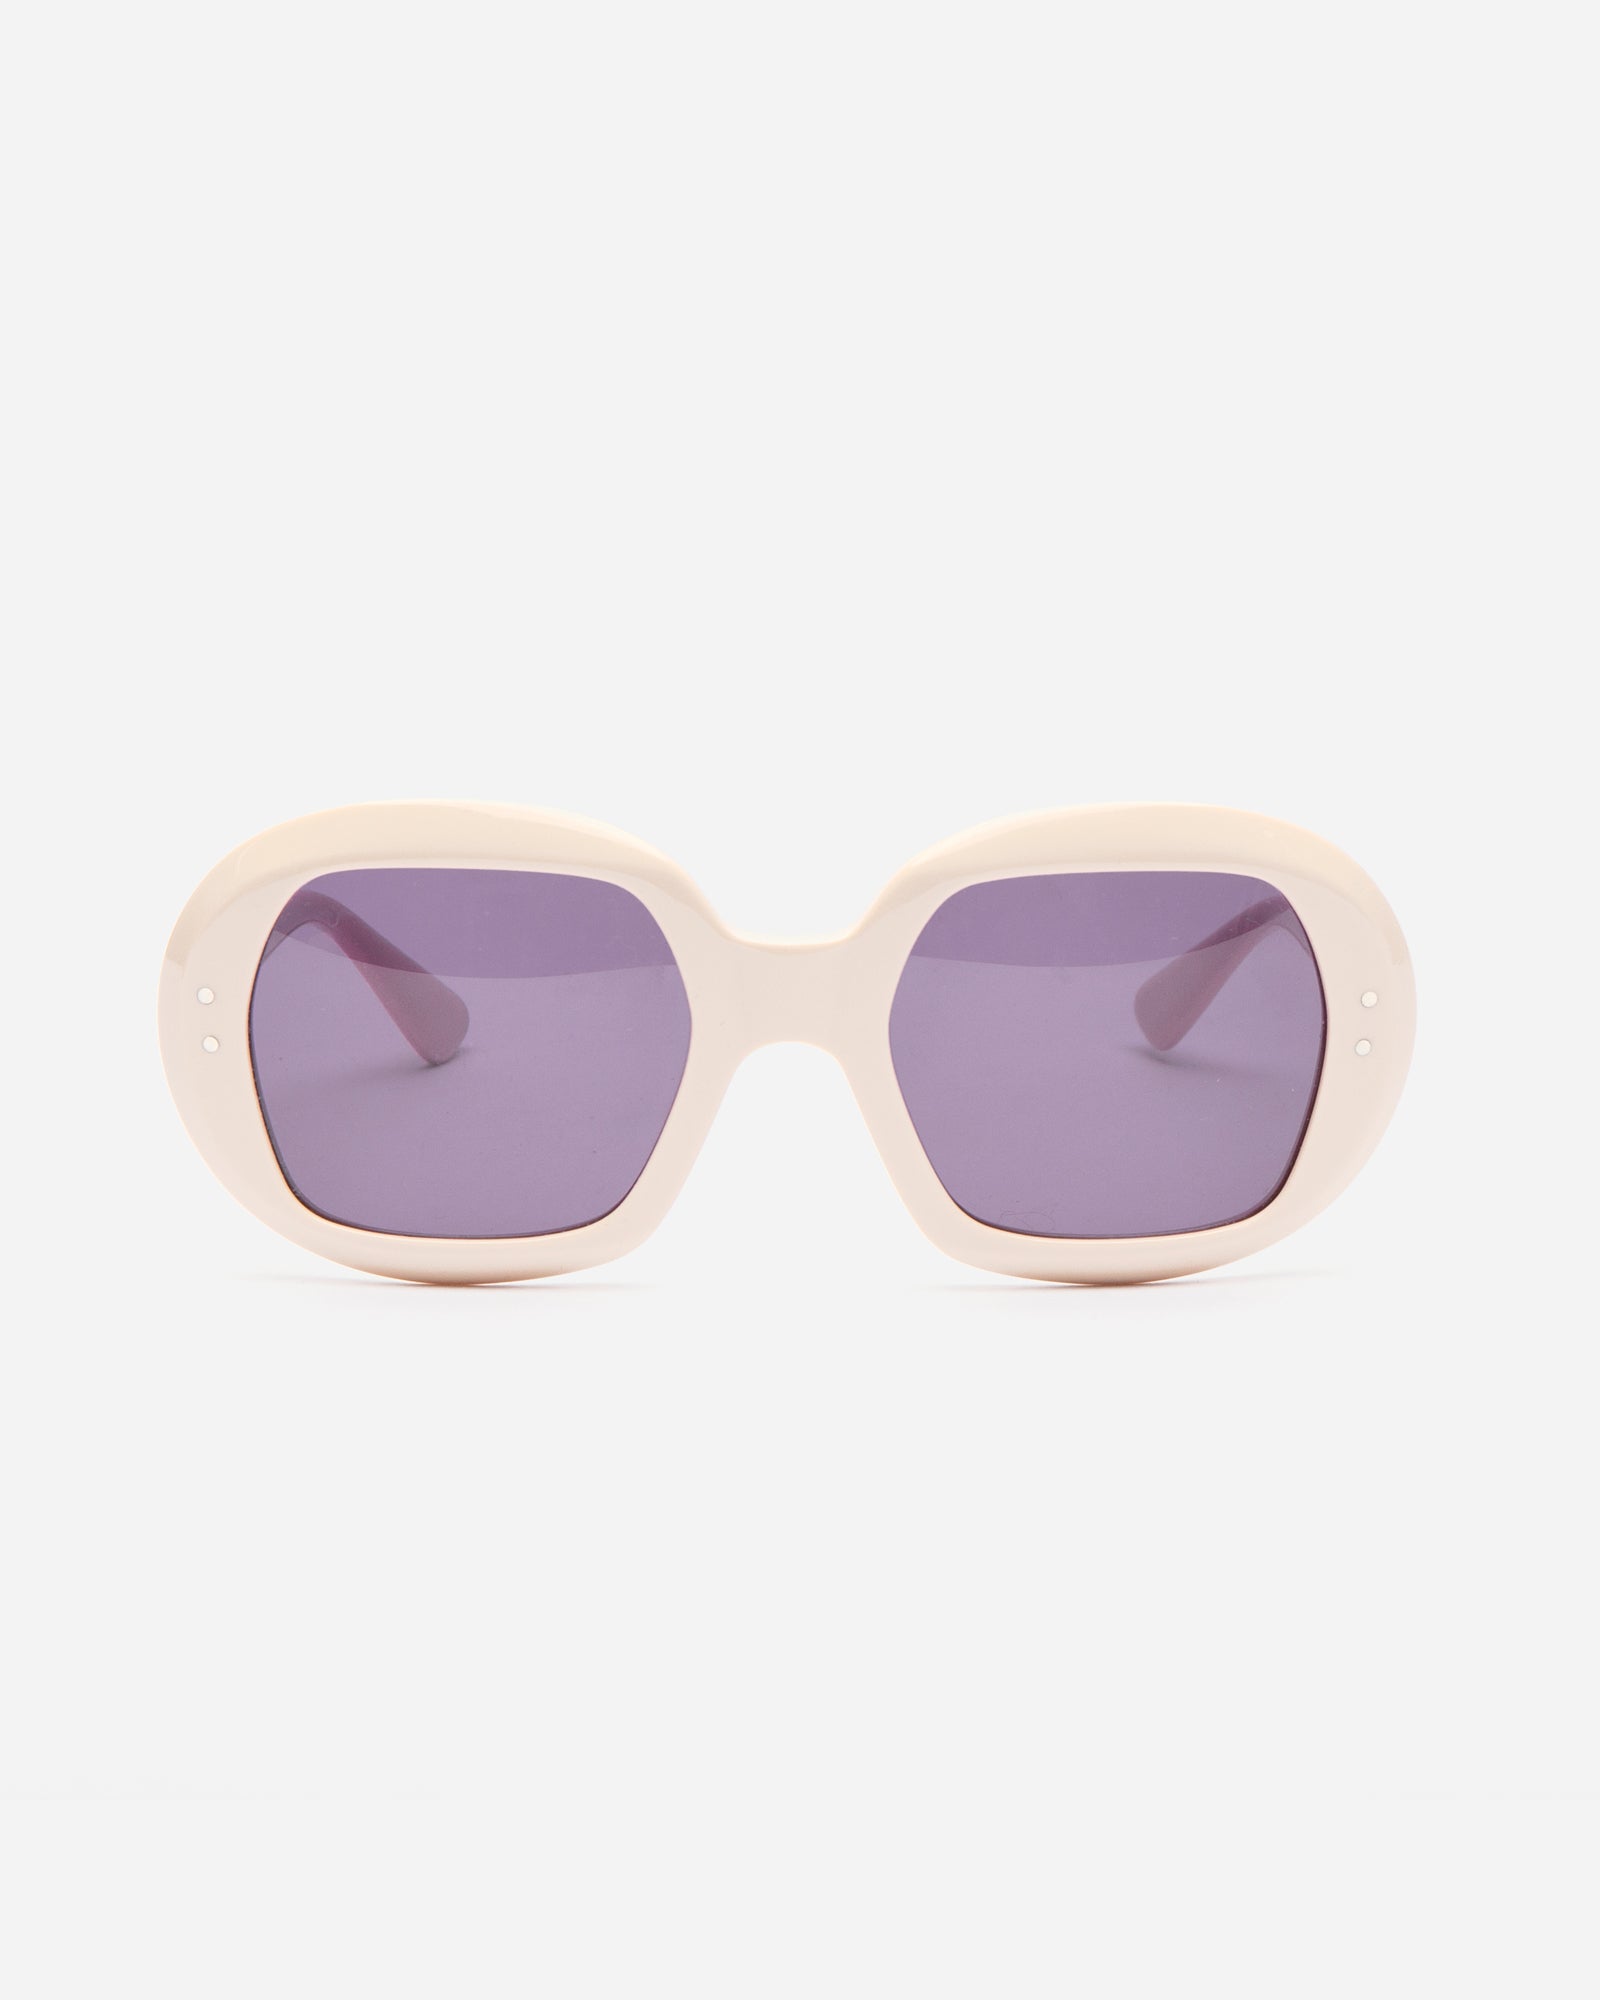 Selima Optique x FV Babs Sunglasses Ivory